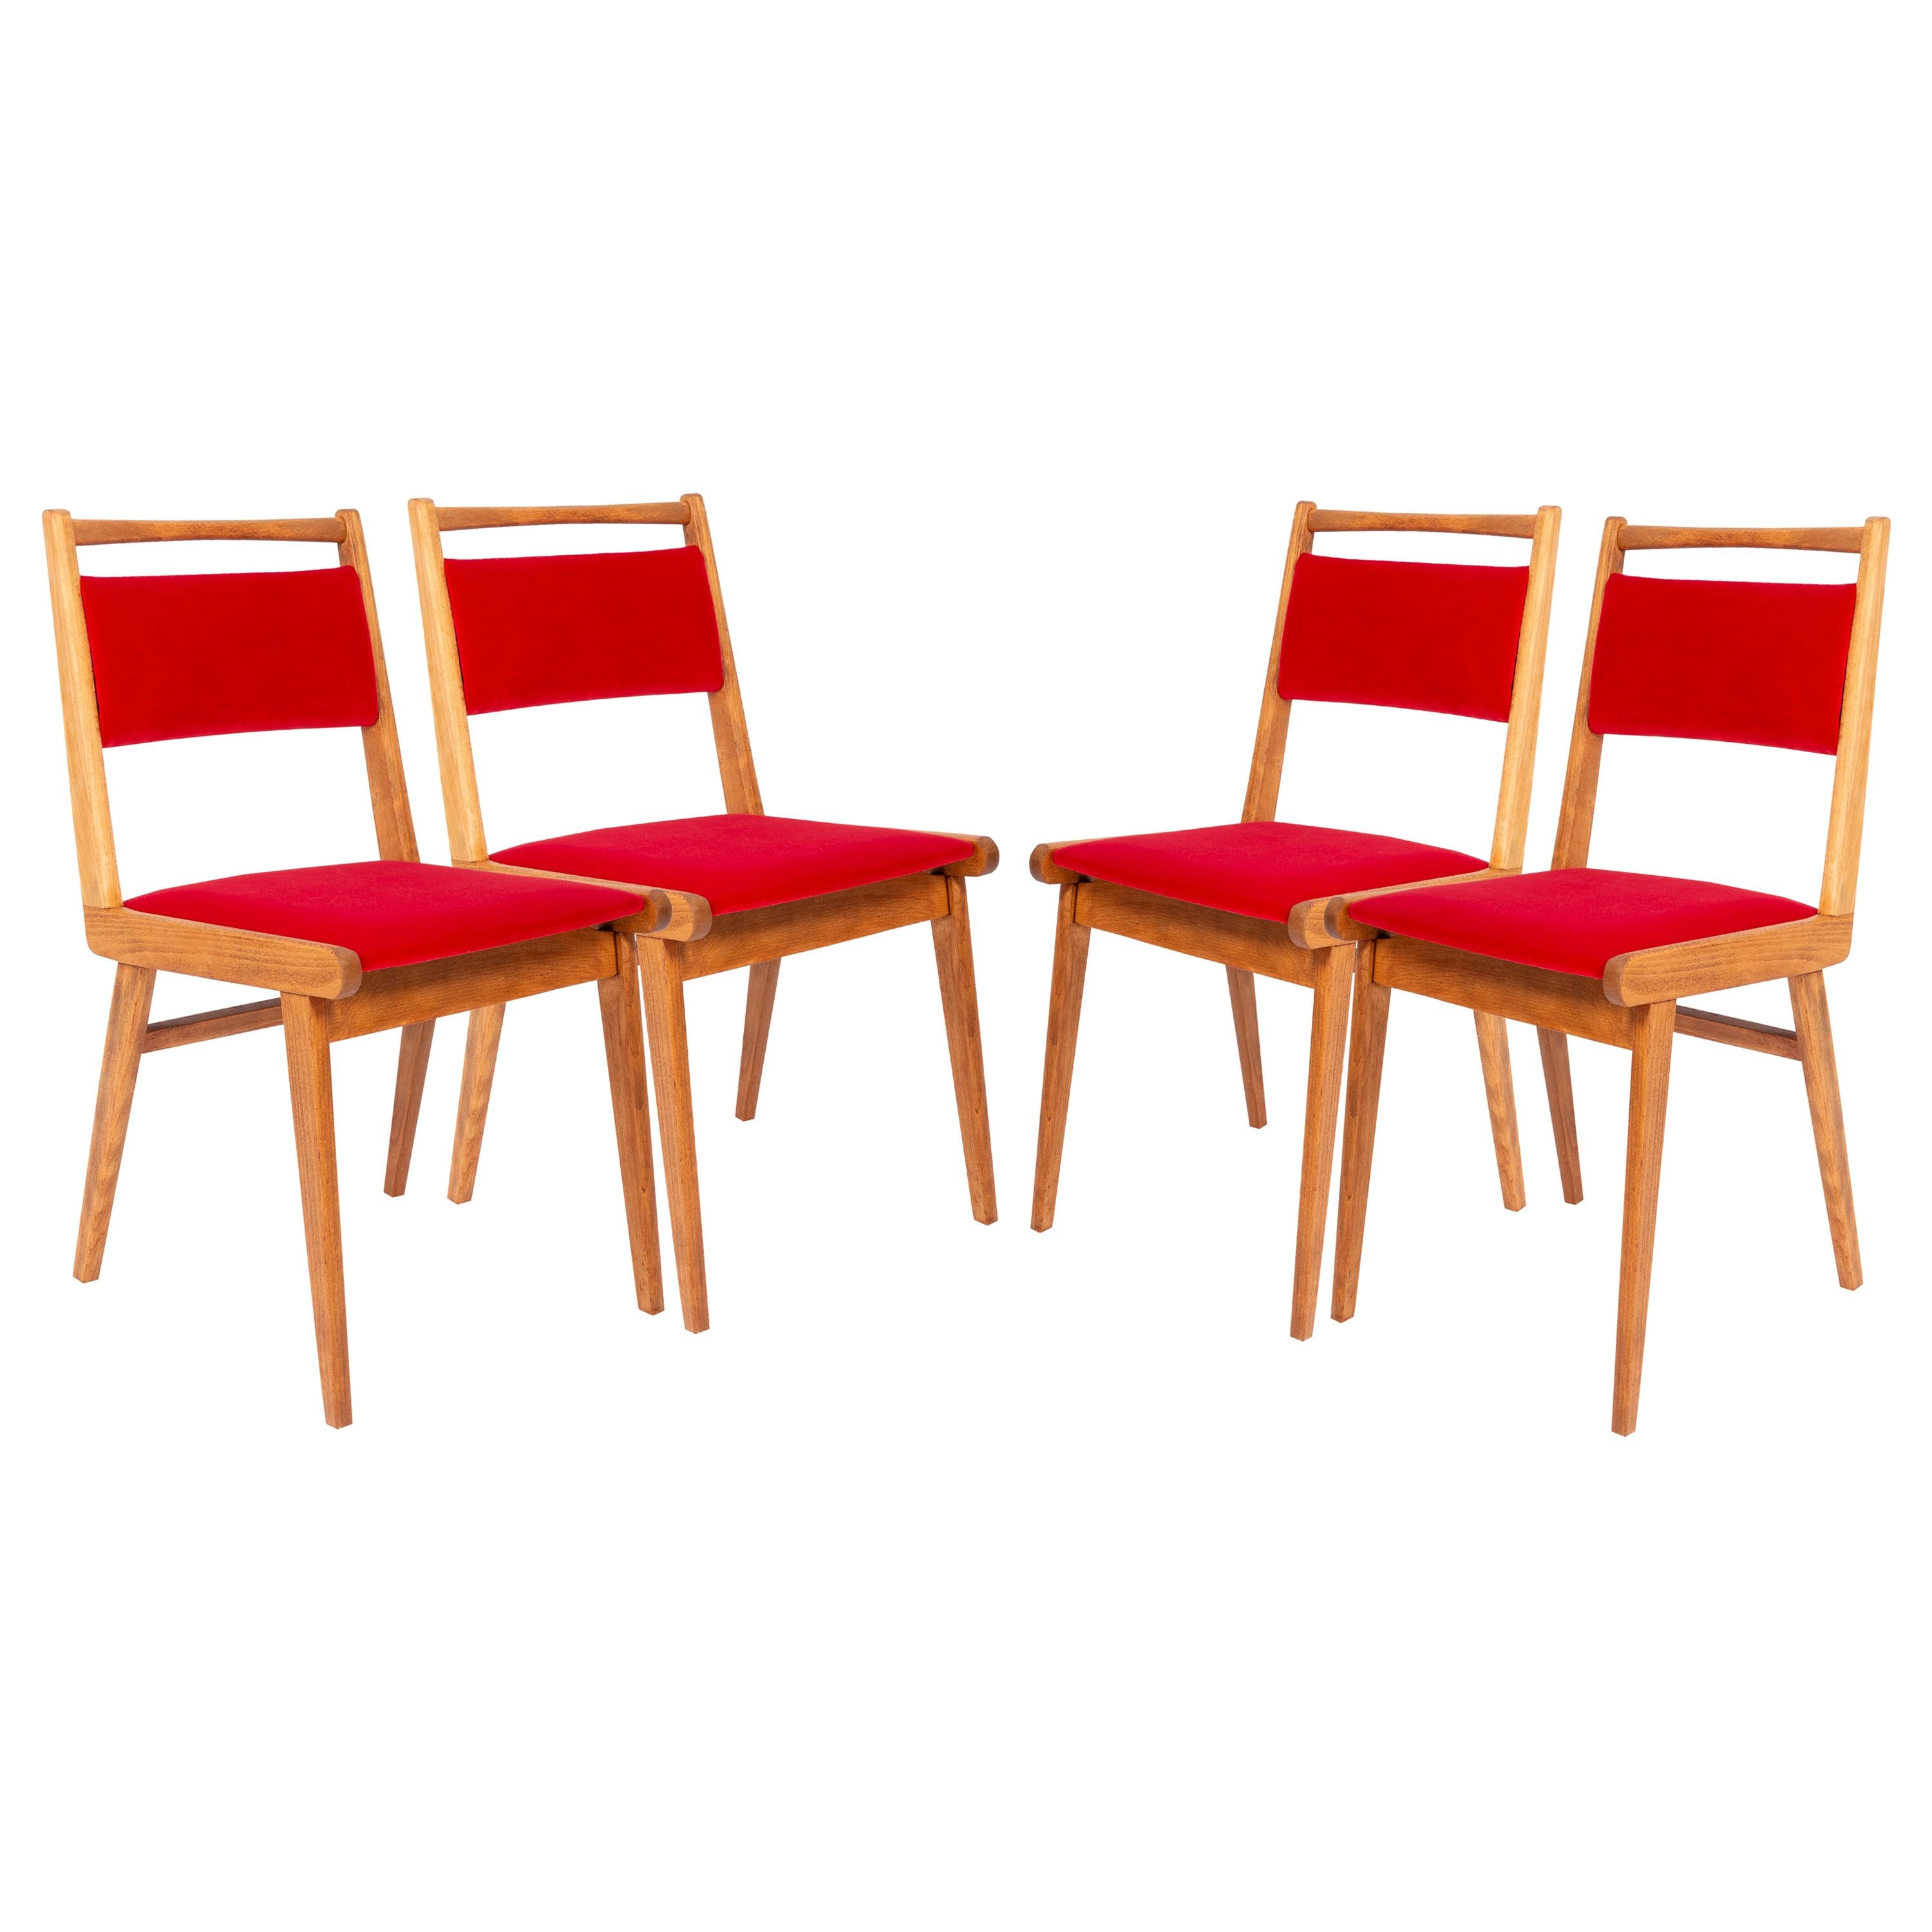 Set of Four 20th Century Red Velvet Chairs, by Rajmund Halas, Poland, 1960s